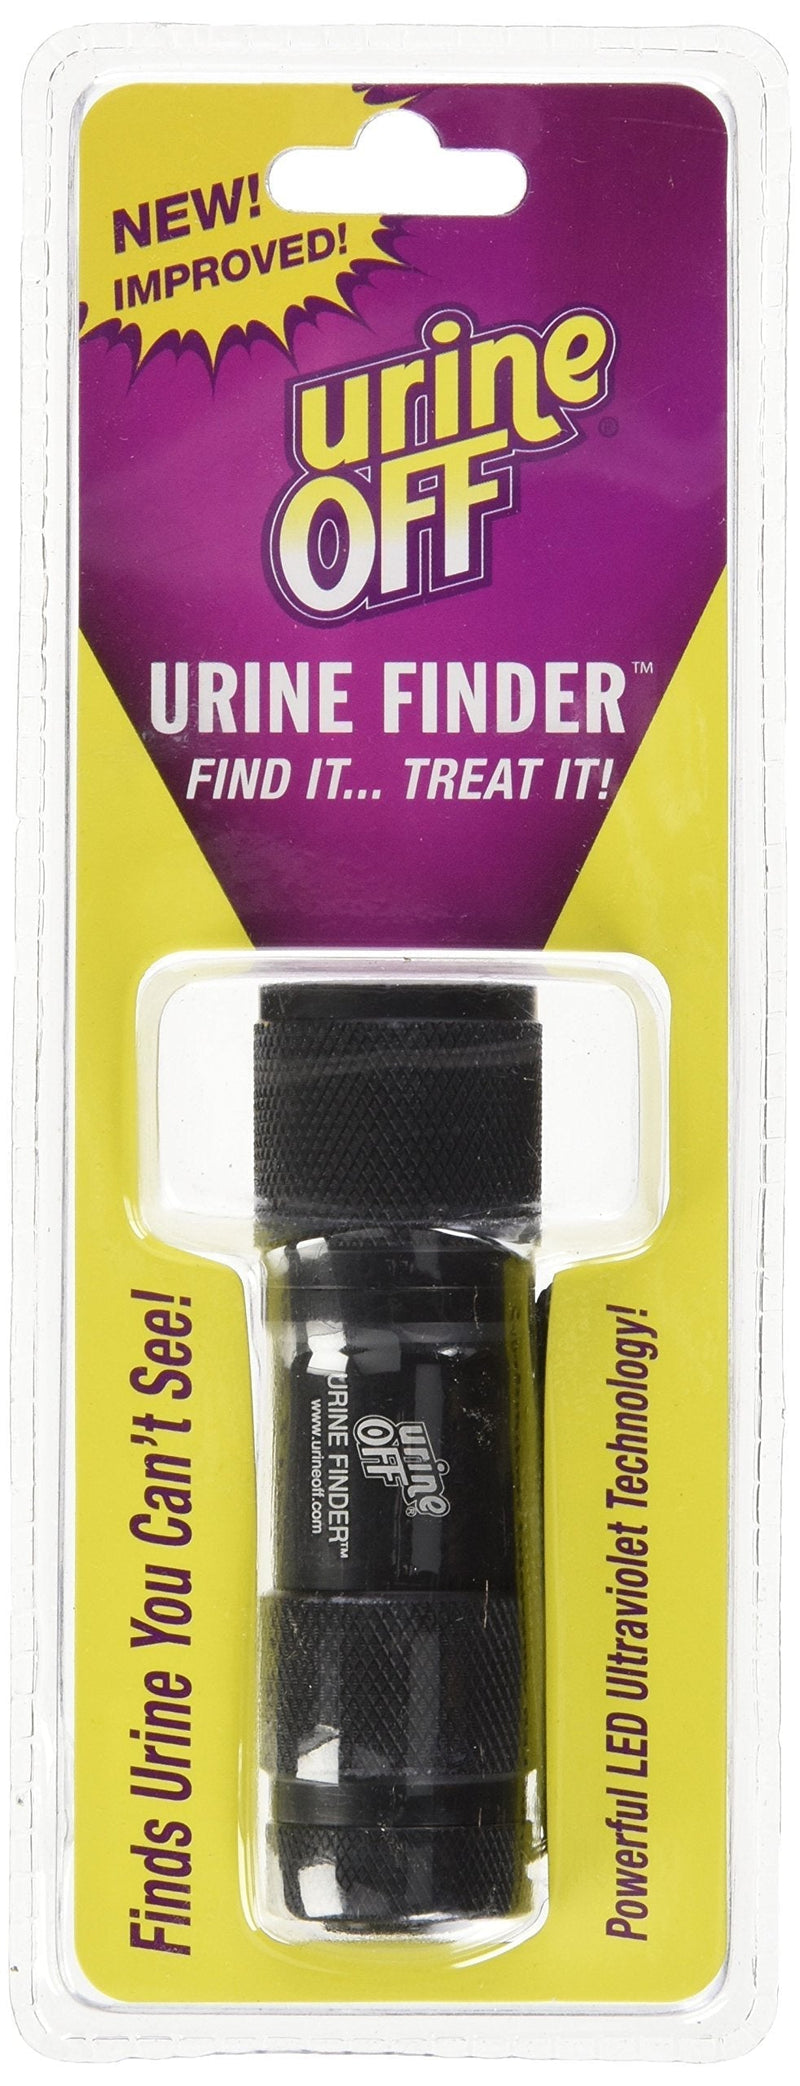 [Australia] - Urine Off Urine Finder Mini LED Light 